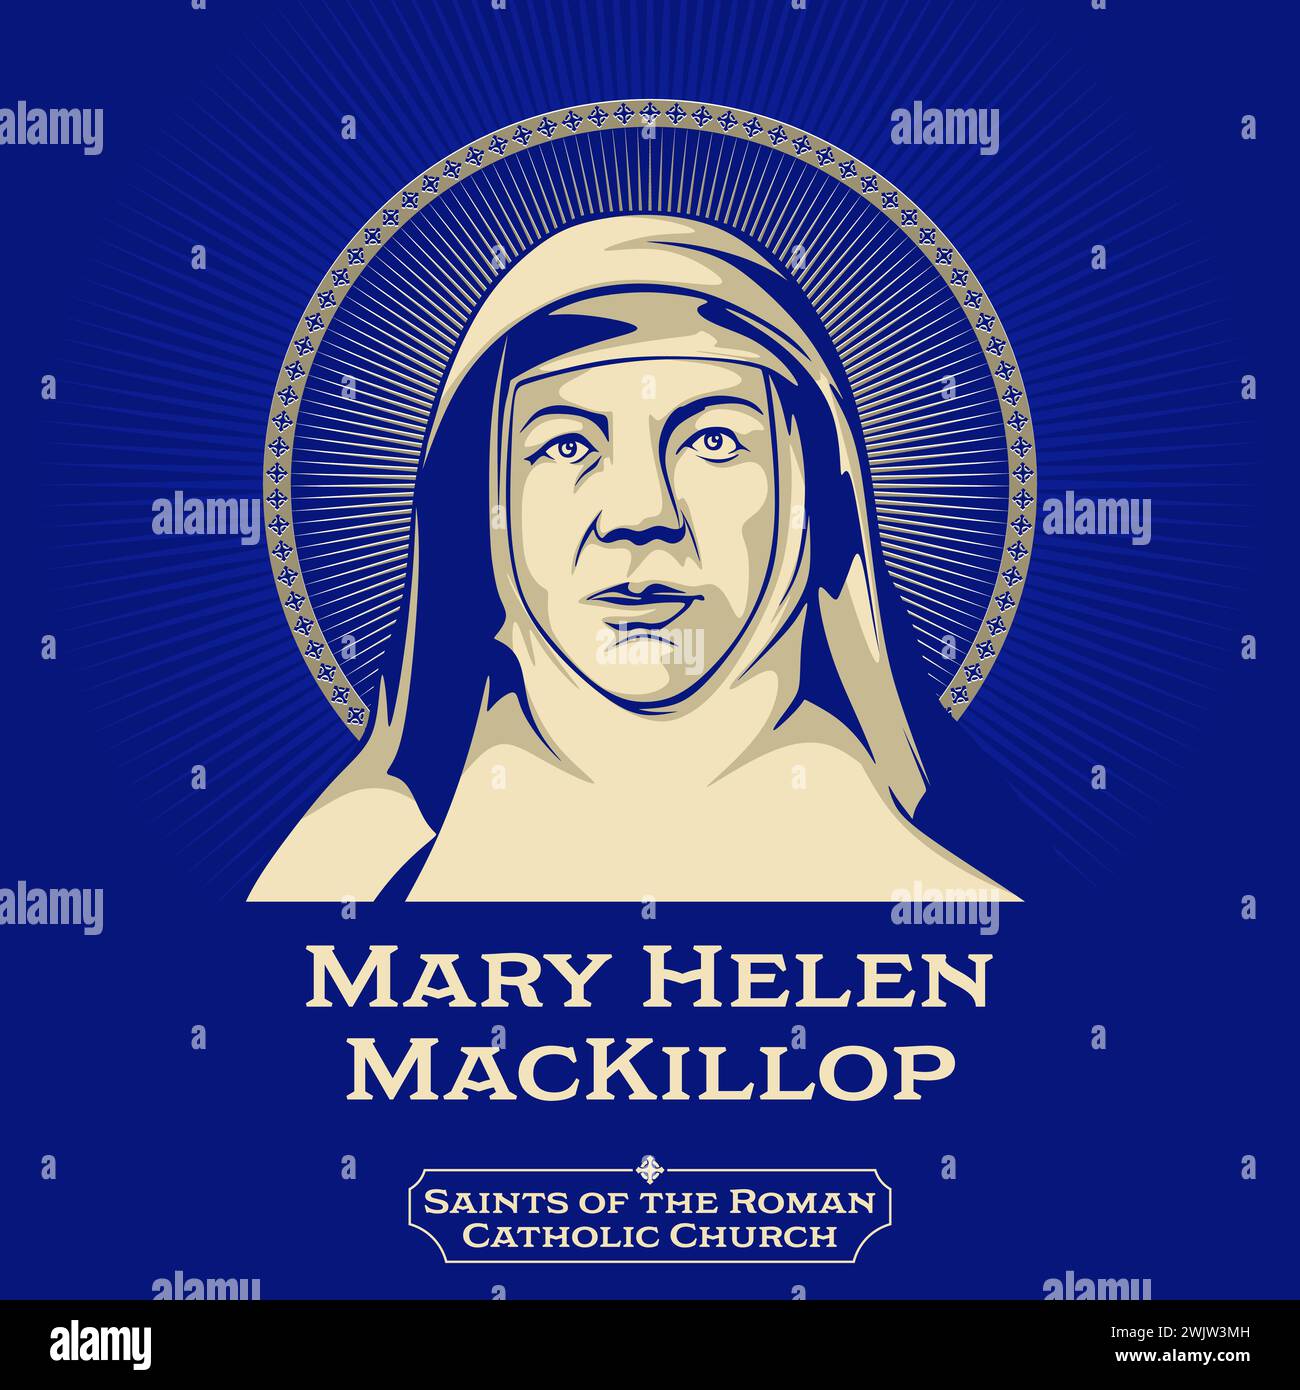 Saints of the Catholic Church. Mary Helen MacKillop (1842-1909) was an Australian religious sister who has been declared a saint by the Catholic Churc Stock Vector